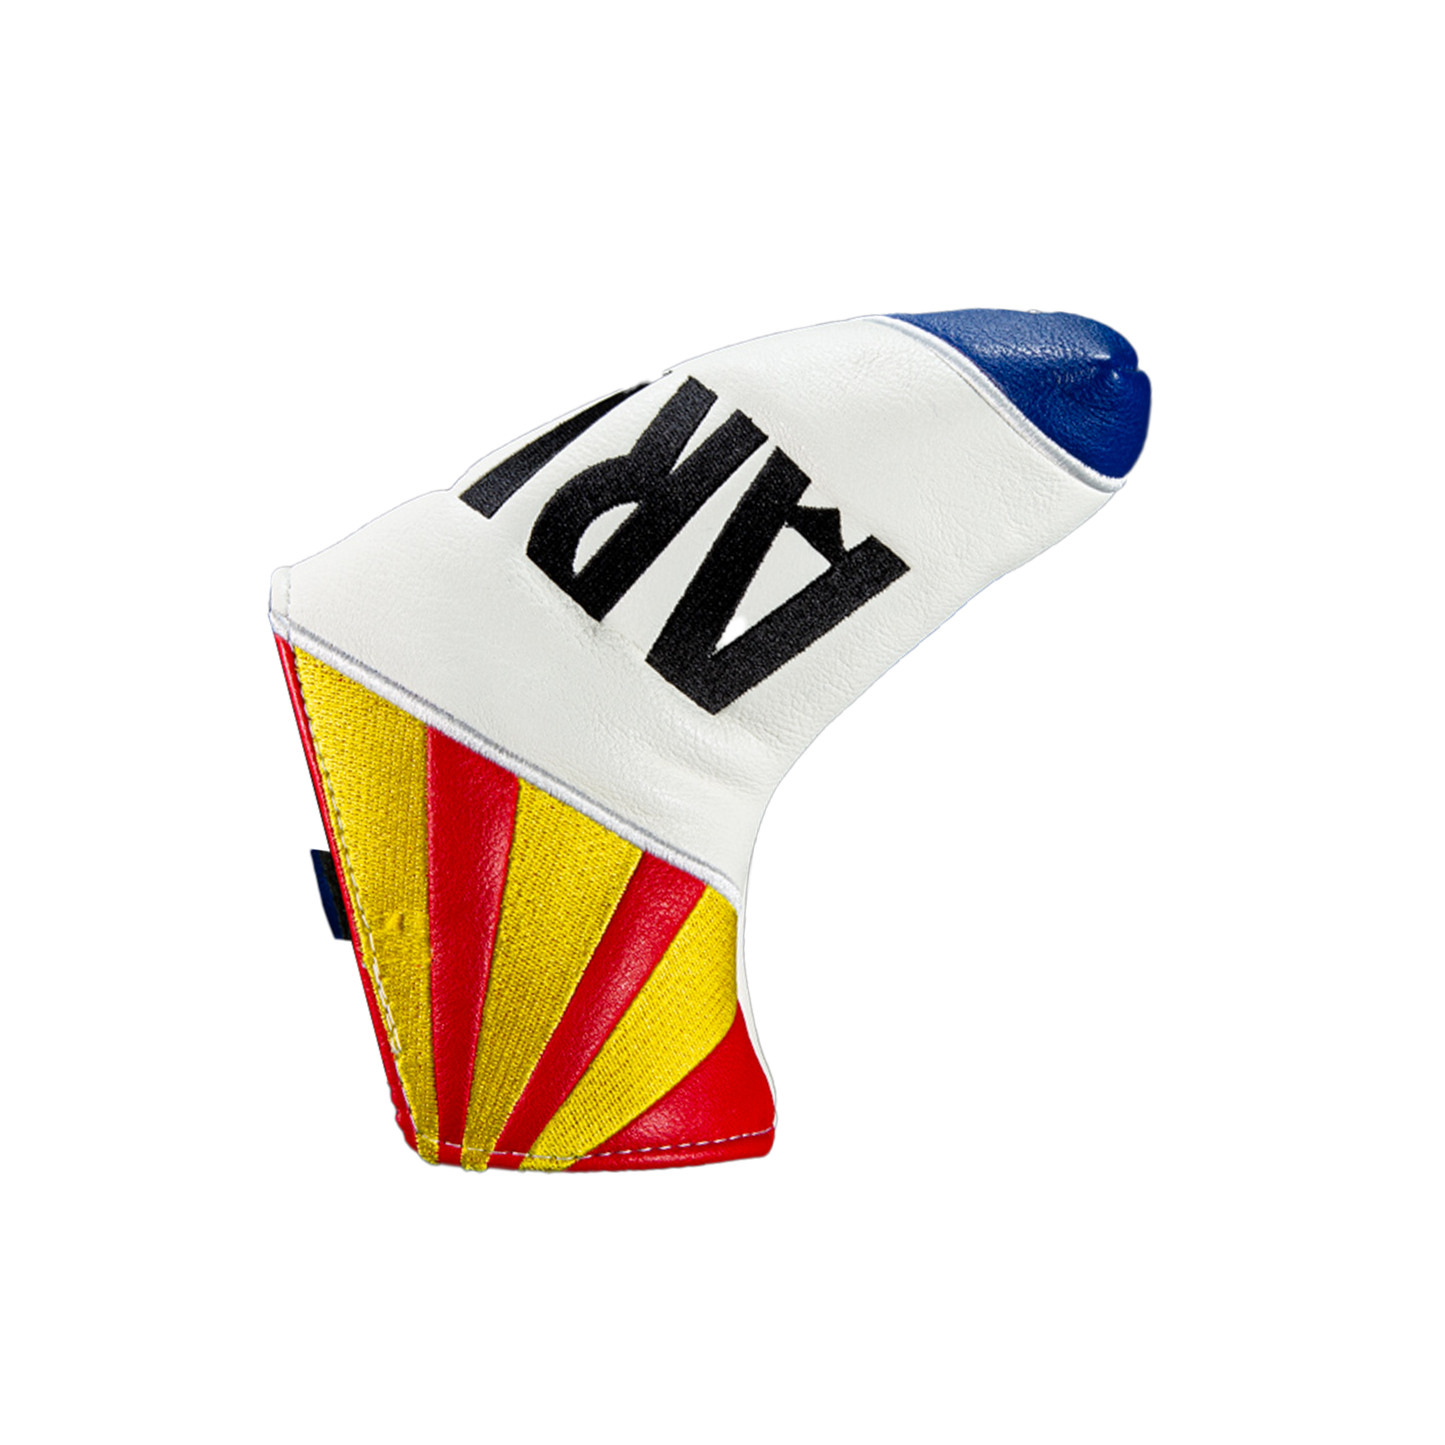 Arizona "Flag" Blade Putter Cover